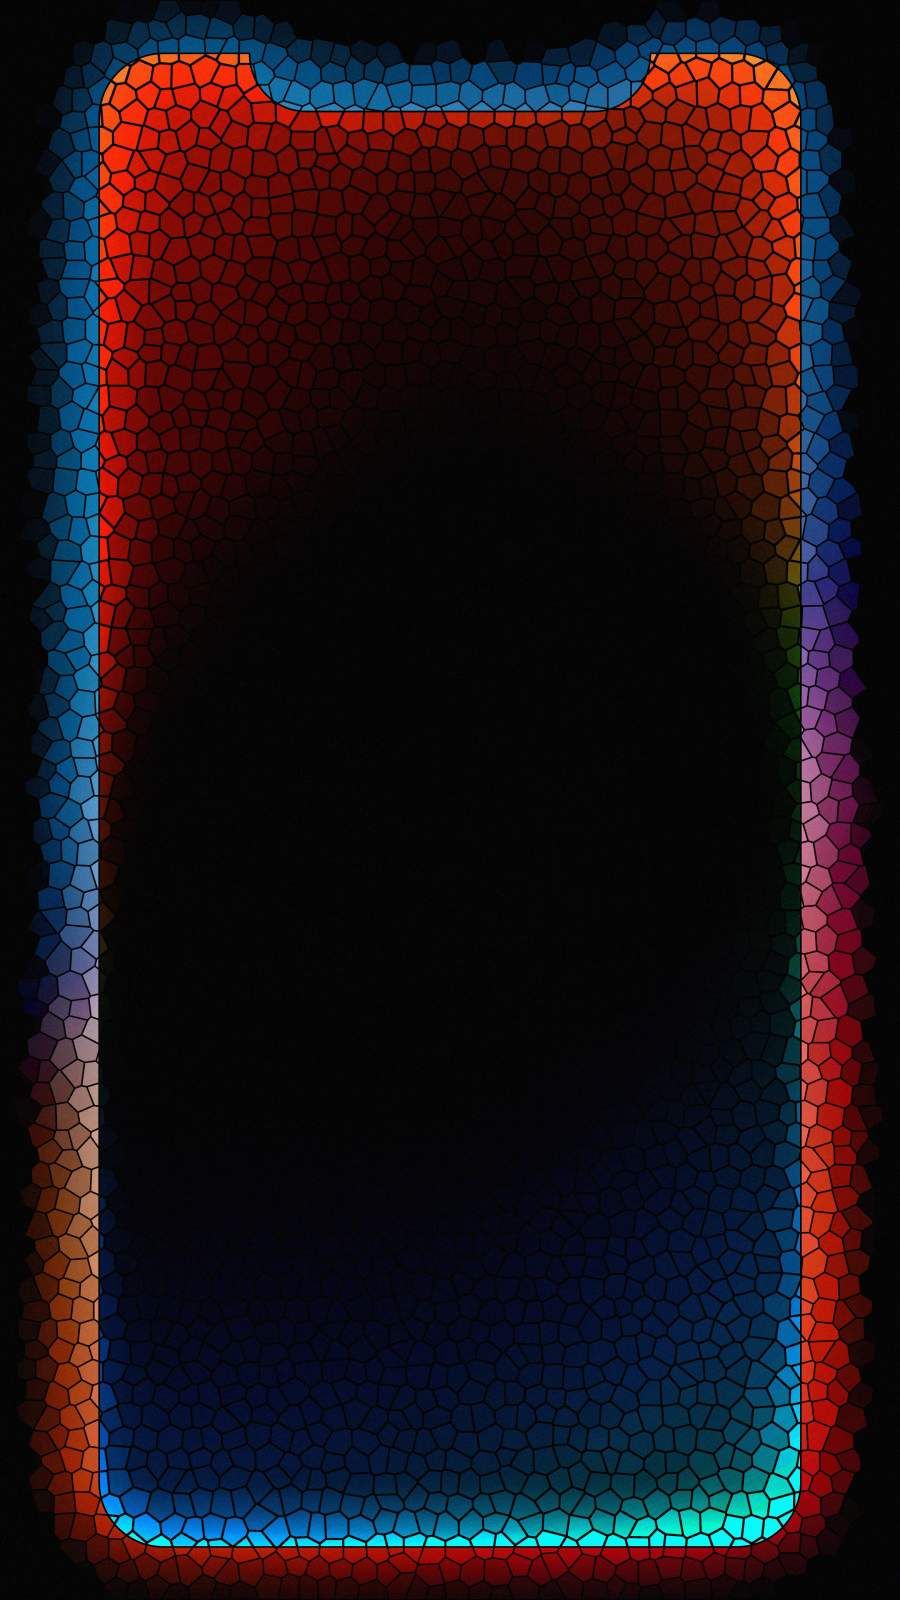 Neon border vaporware/outrun wallpaper for iPhone 13 (fits notch) :  r/iWallpaper